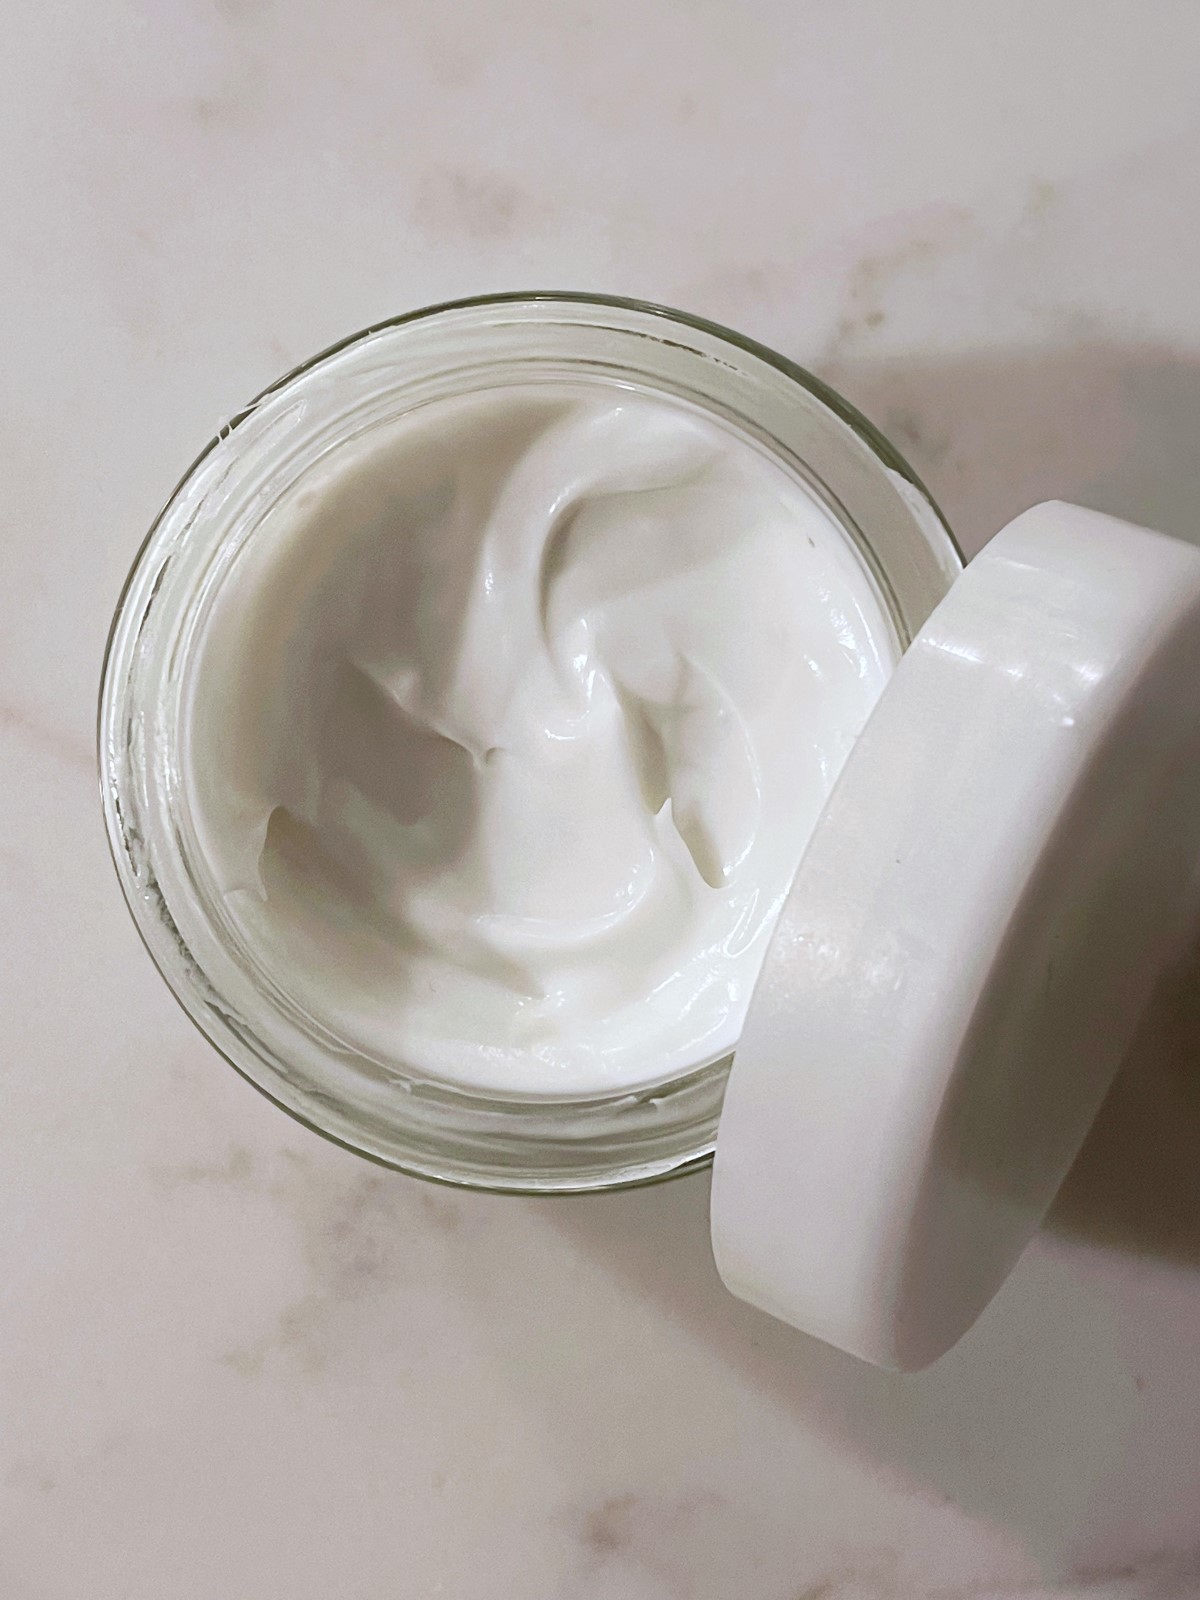 Burt’s Bees Sensitive Night Cream - luxury skincare blog review